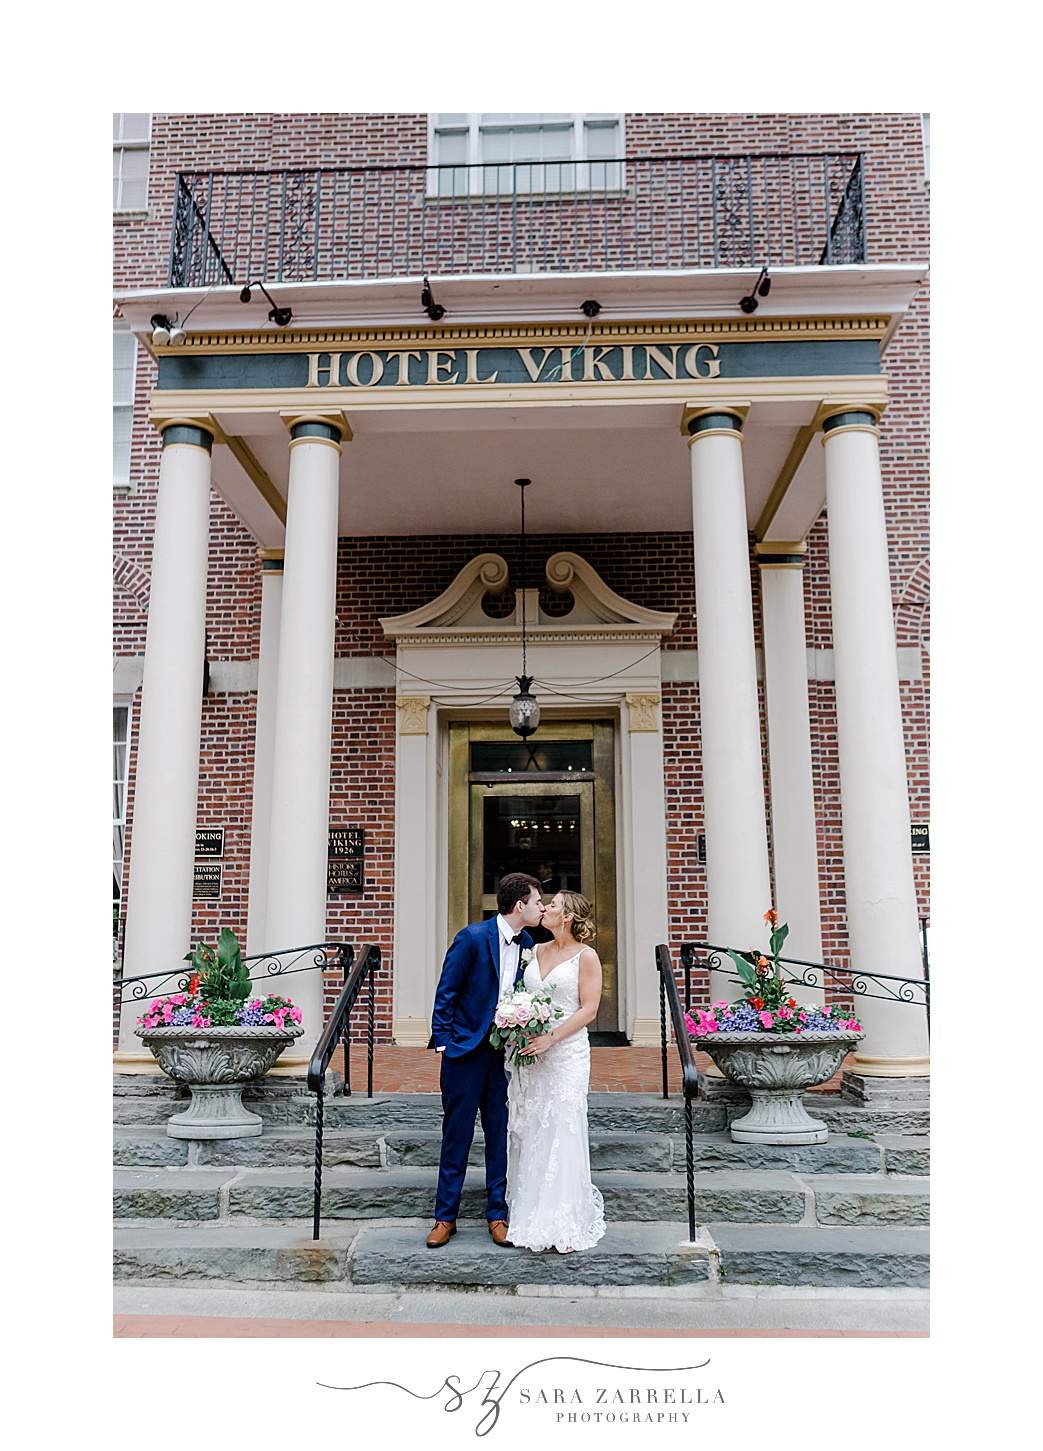 newlyweds kiss on steps the Hotel Viking in Newport RI